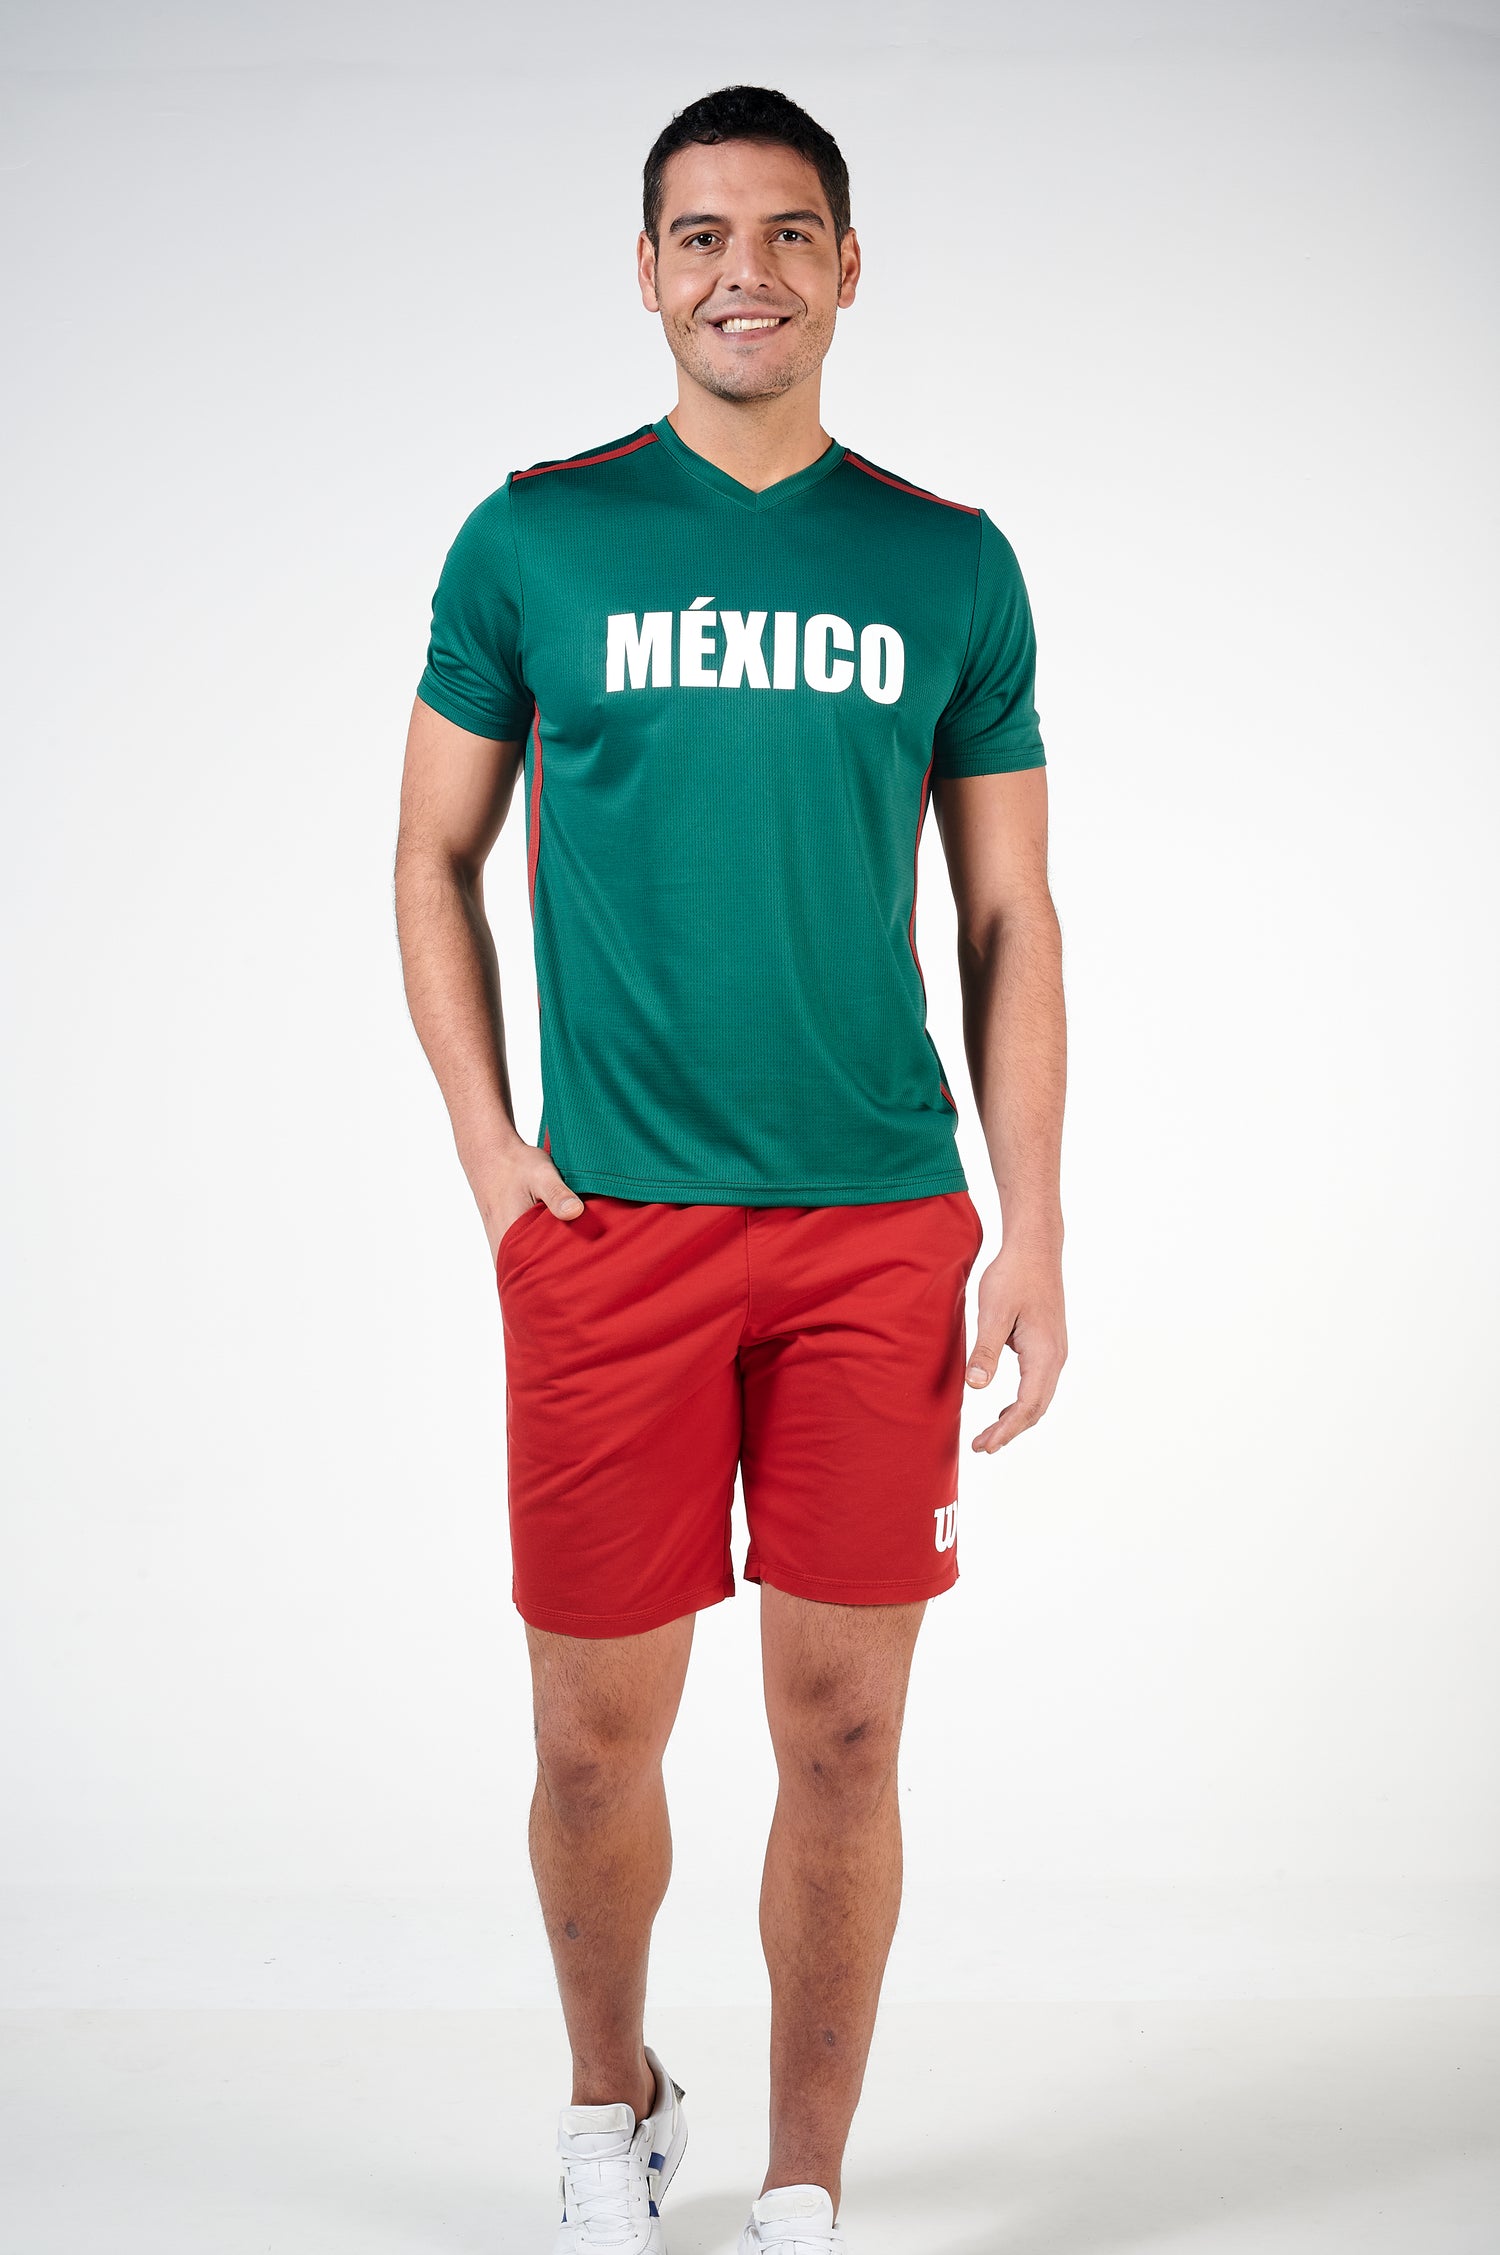 Playeras México